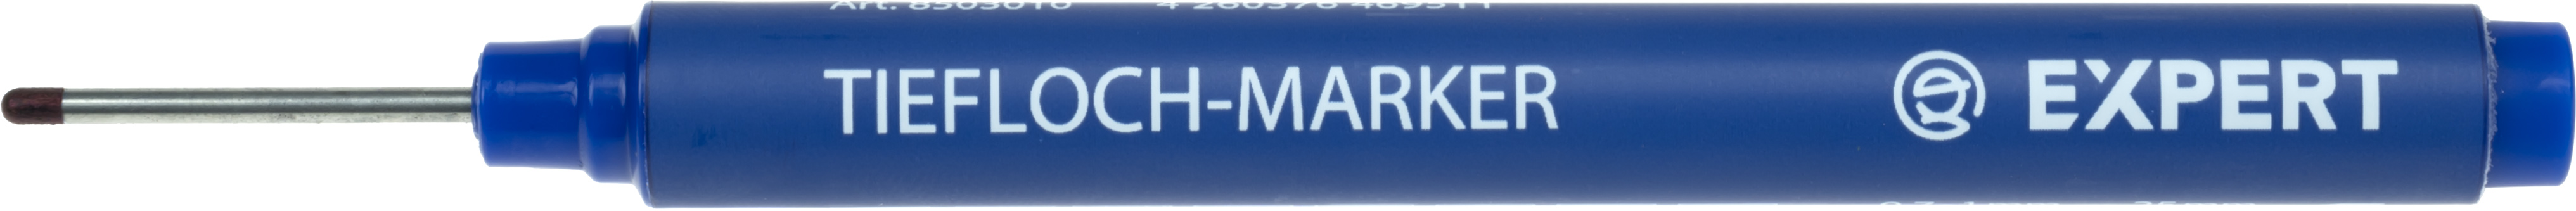 EXPERT Tiefloch-Marker, blau